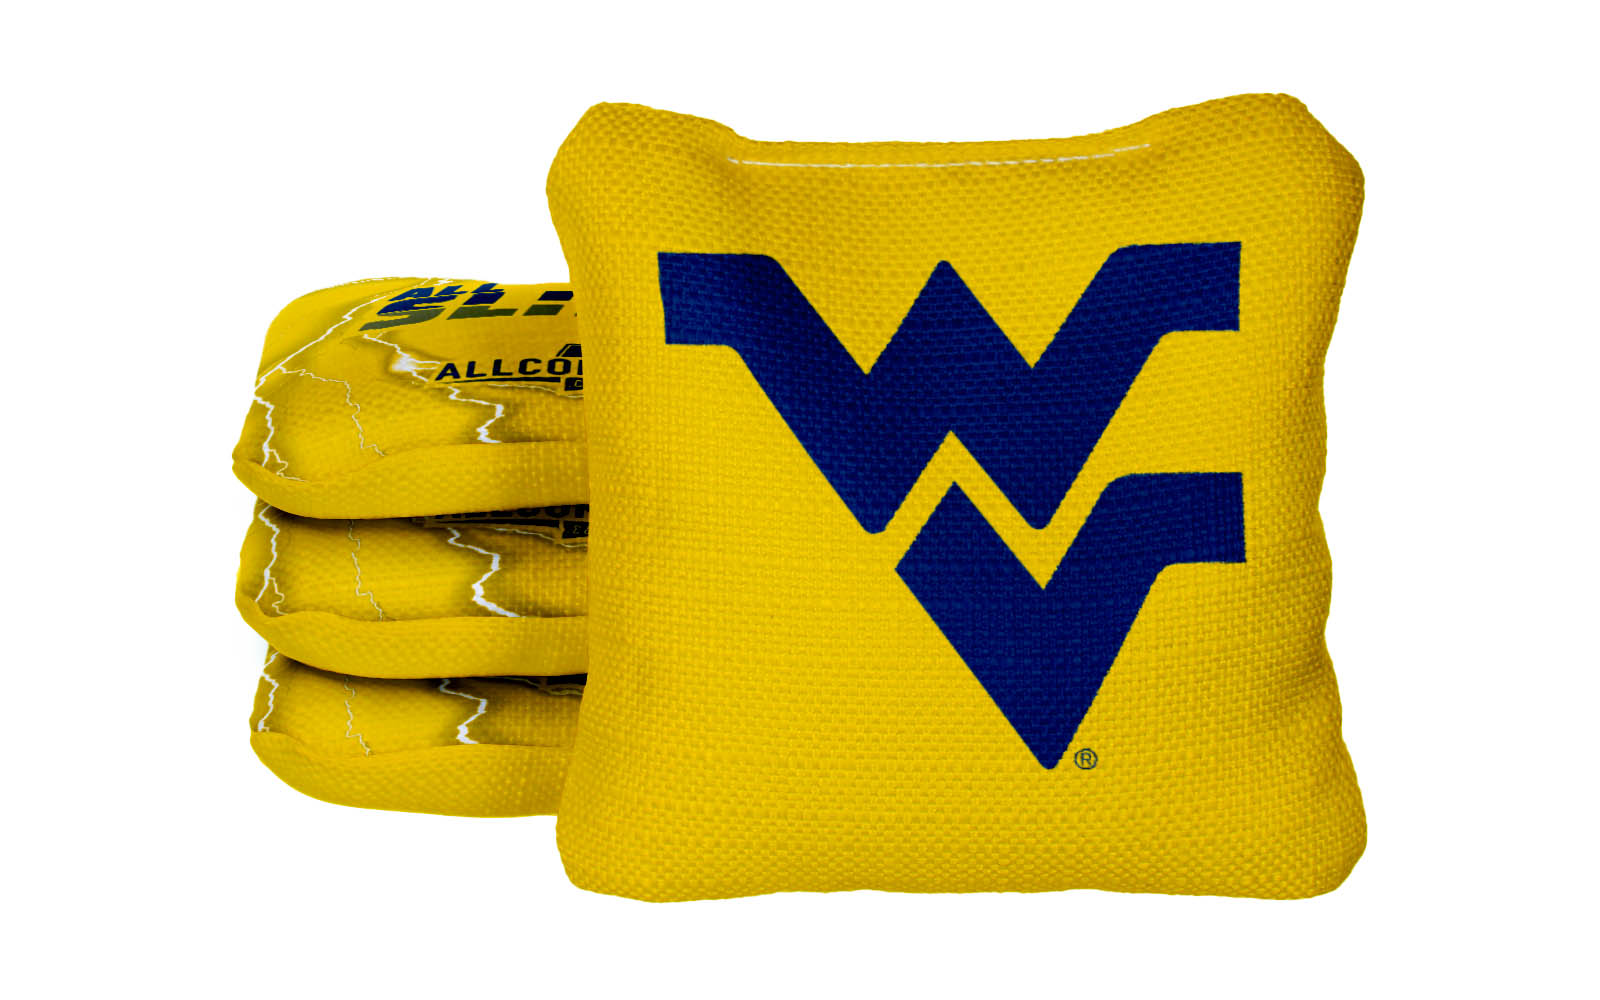 Officially Licensed Collegiate Cornhole Bags - AllCornhole All-Slide 2.0 - Set of 4 - West Virginia University